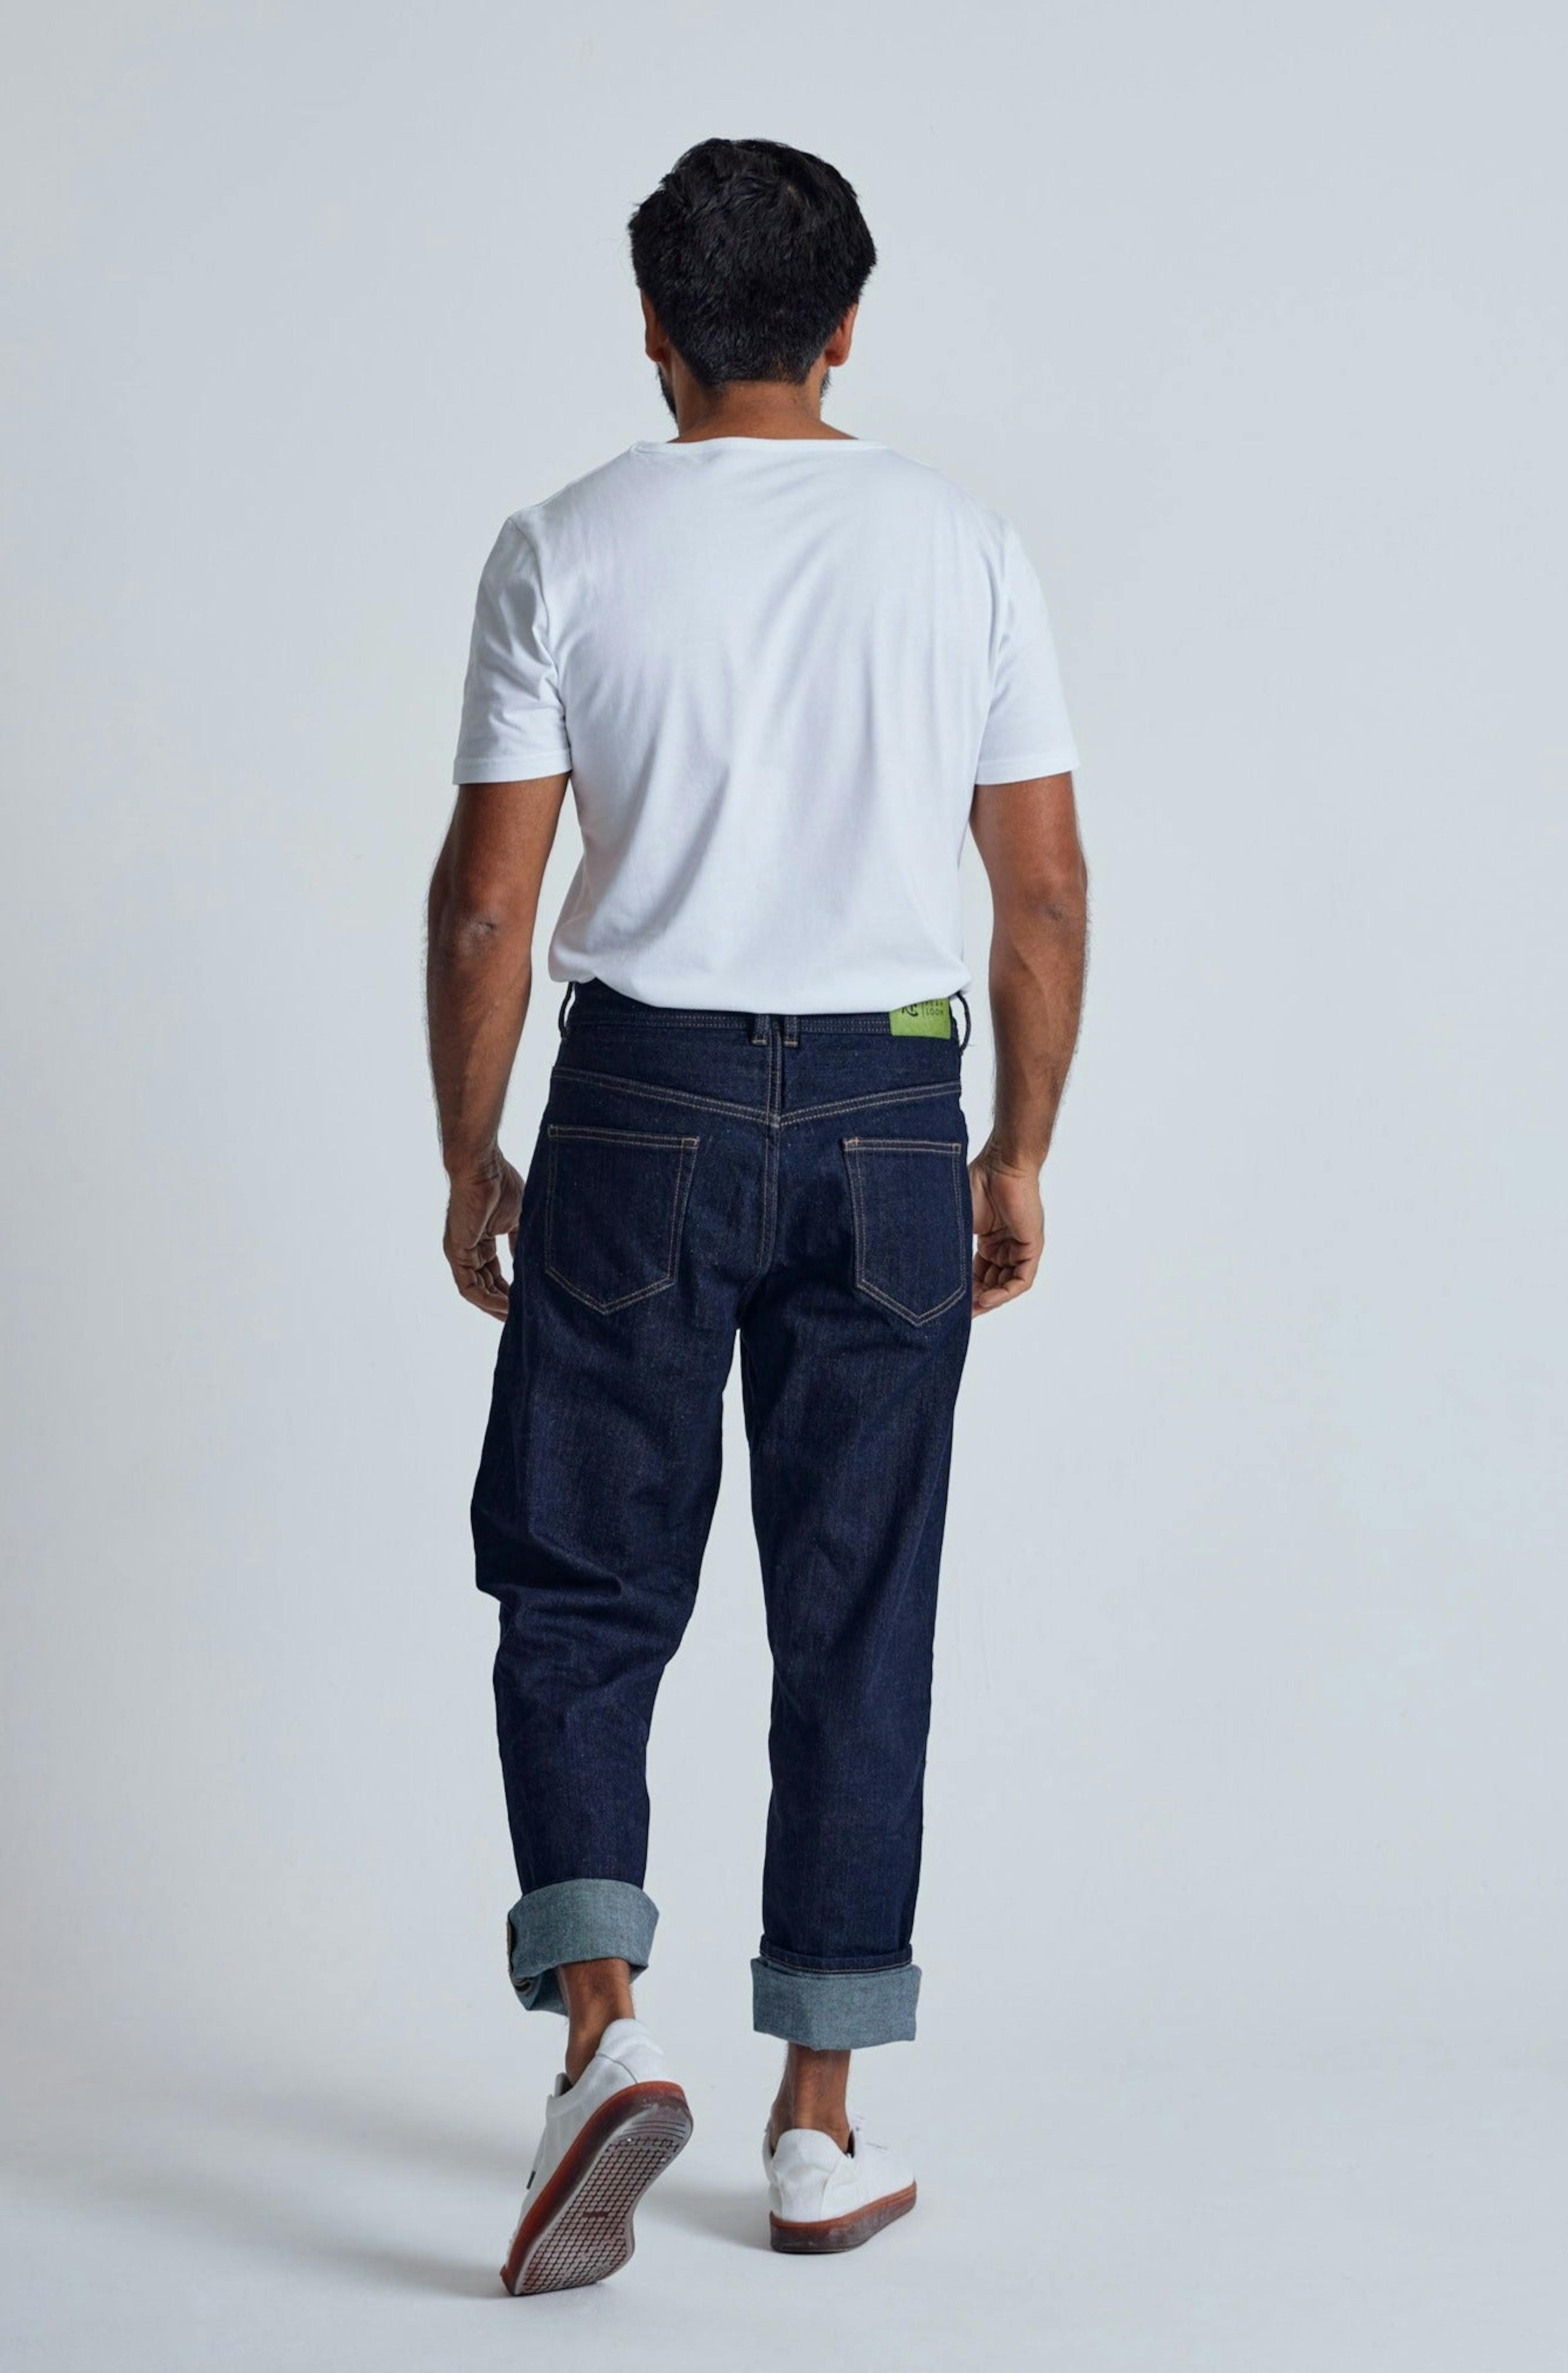 Satch | GOTS Certified Organic Cotton & Hemp Classic American Jeans | Rinse